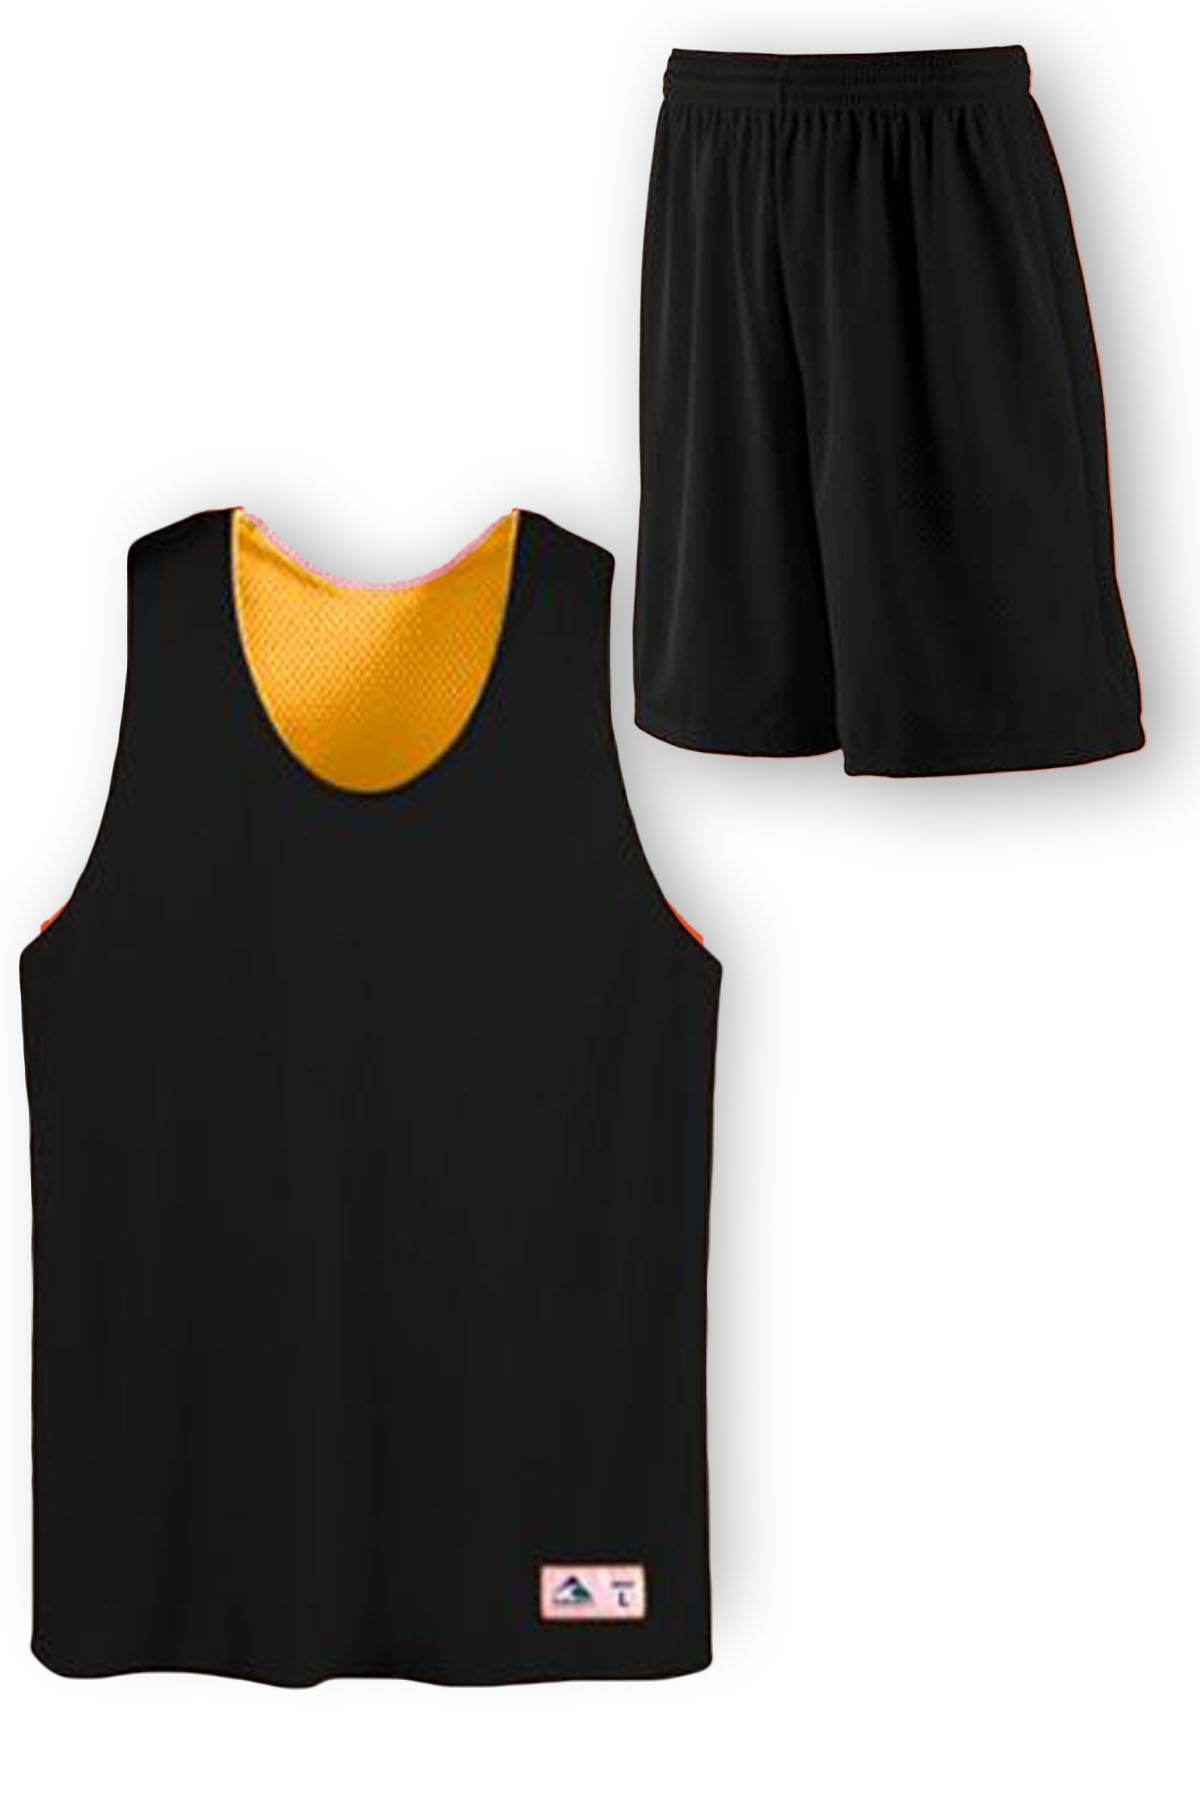 Augusta Sportswear Adult Basketball Uniform PKG